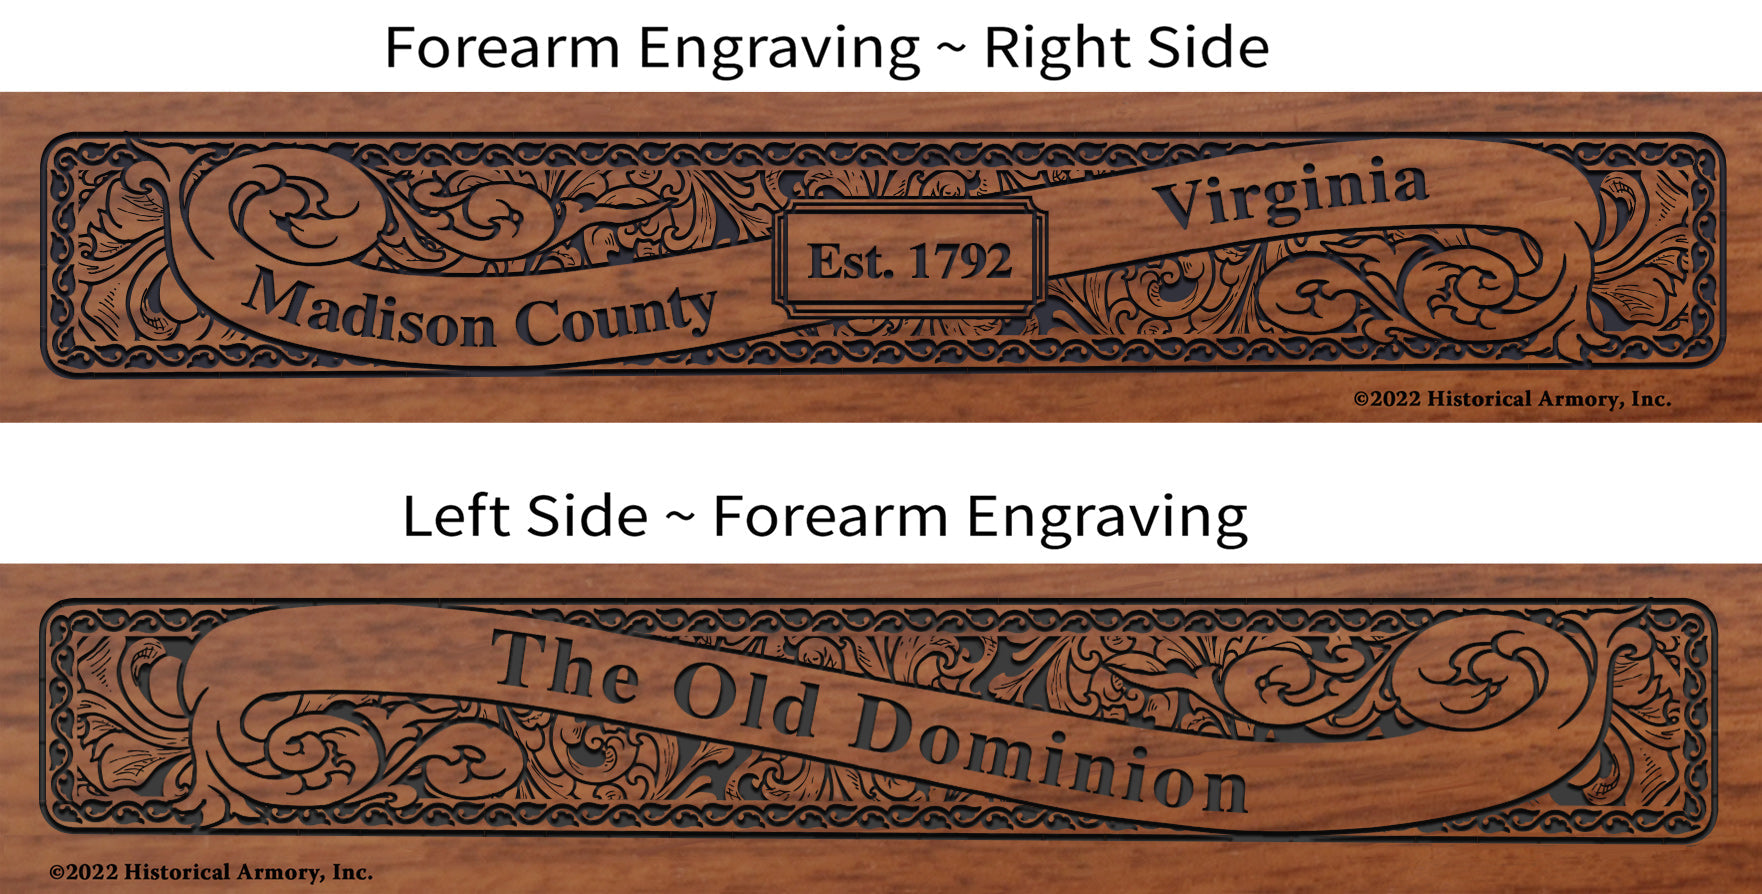 Madison County Virginia Engraved Rifle Forearm